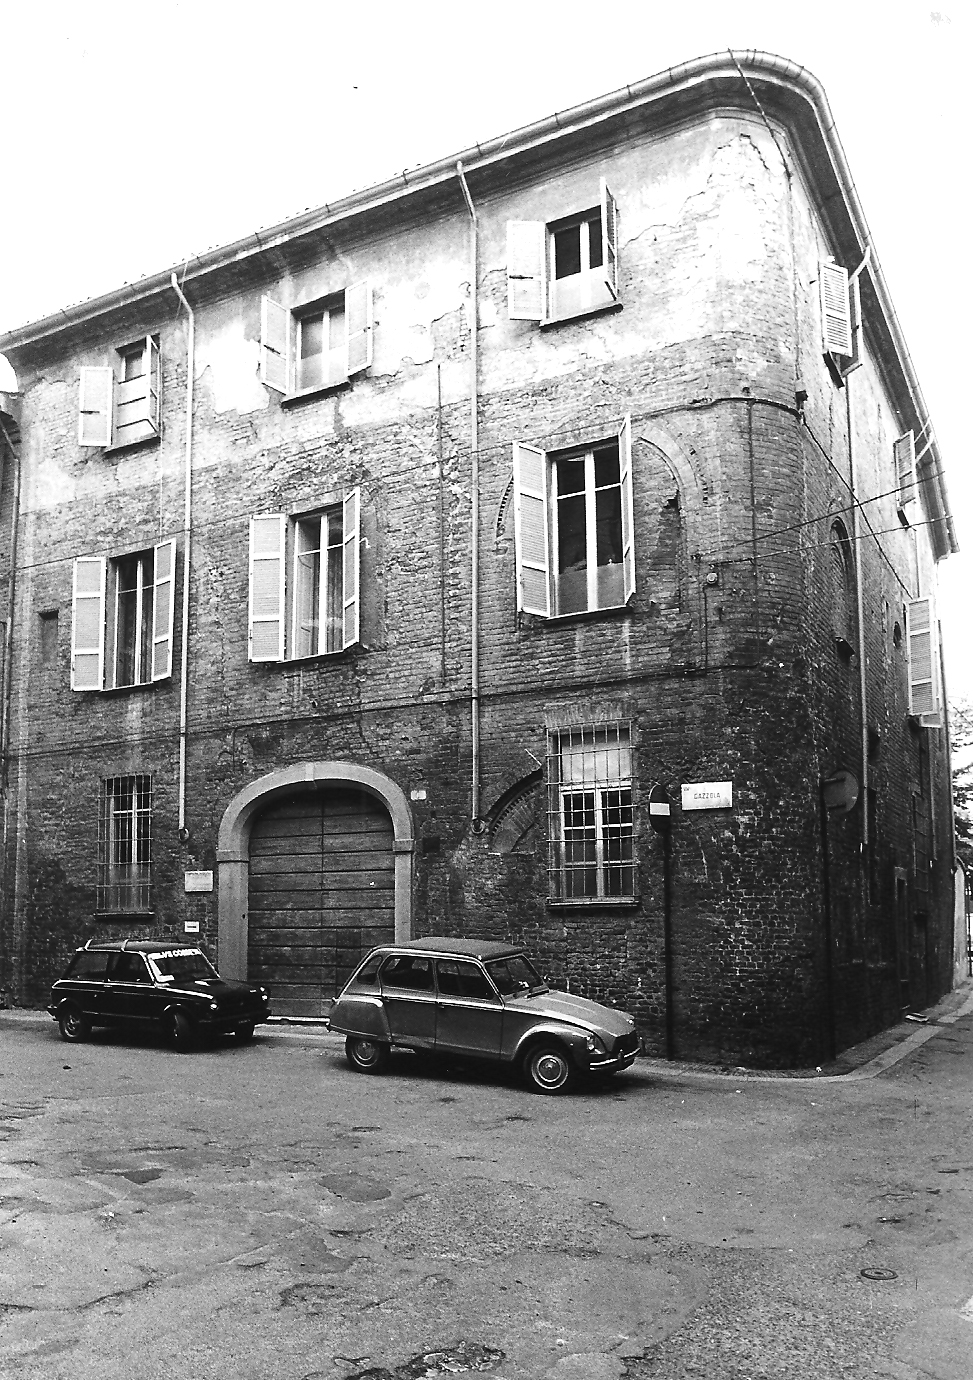 Casa di via Gazzola 1 (casa) - Piacenza (PC) 